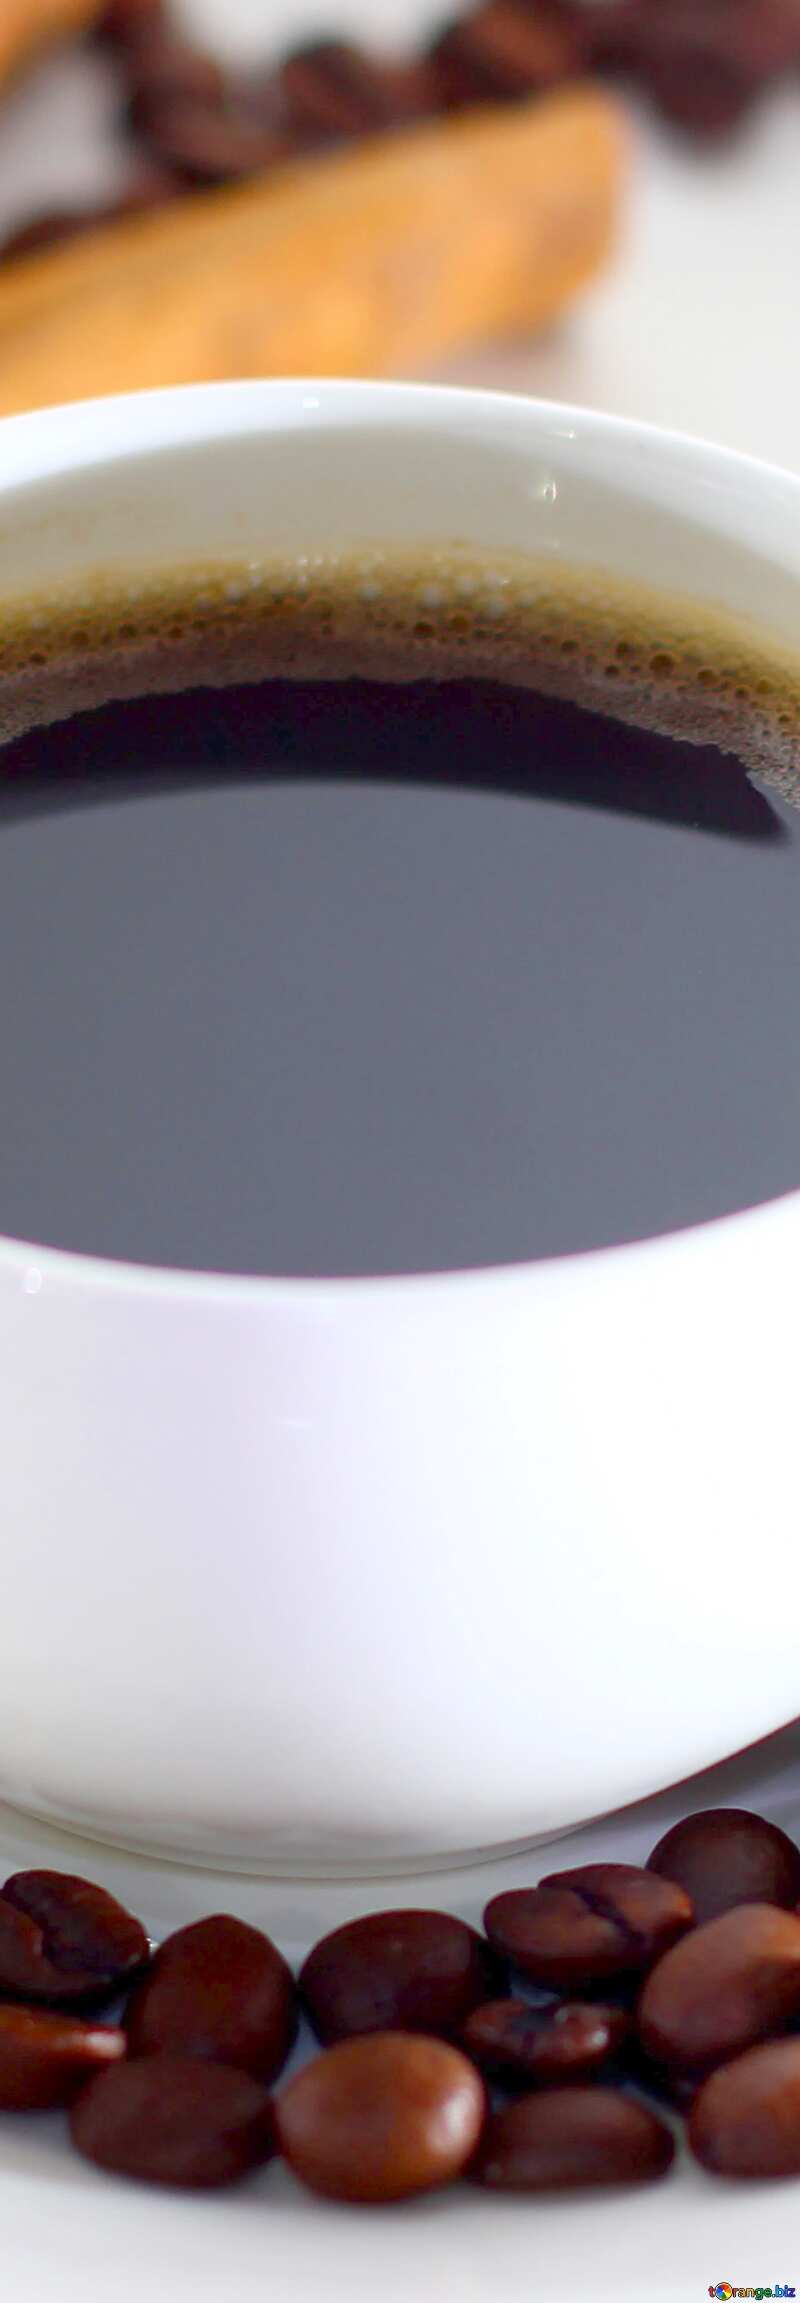 Hermosa taza de cafe №32167